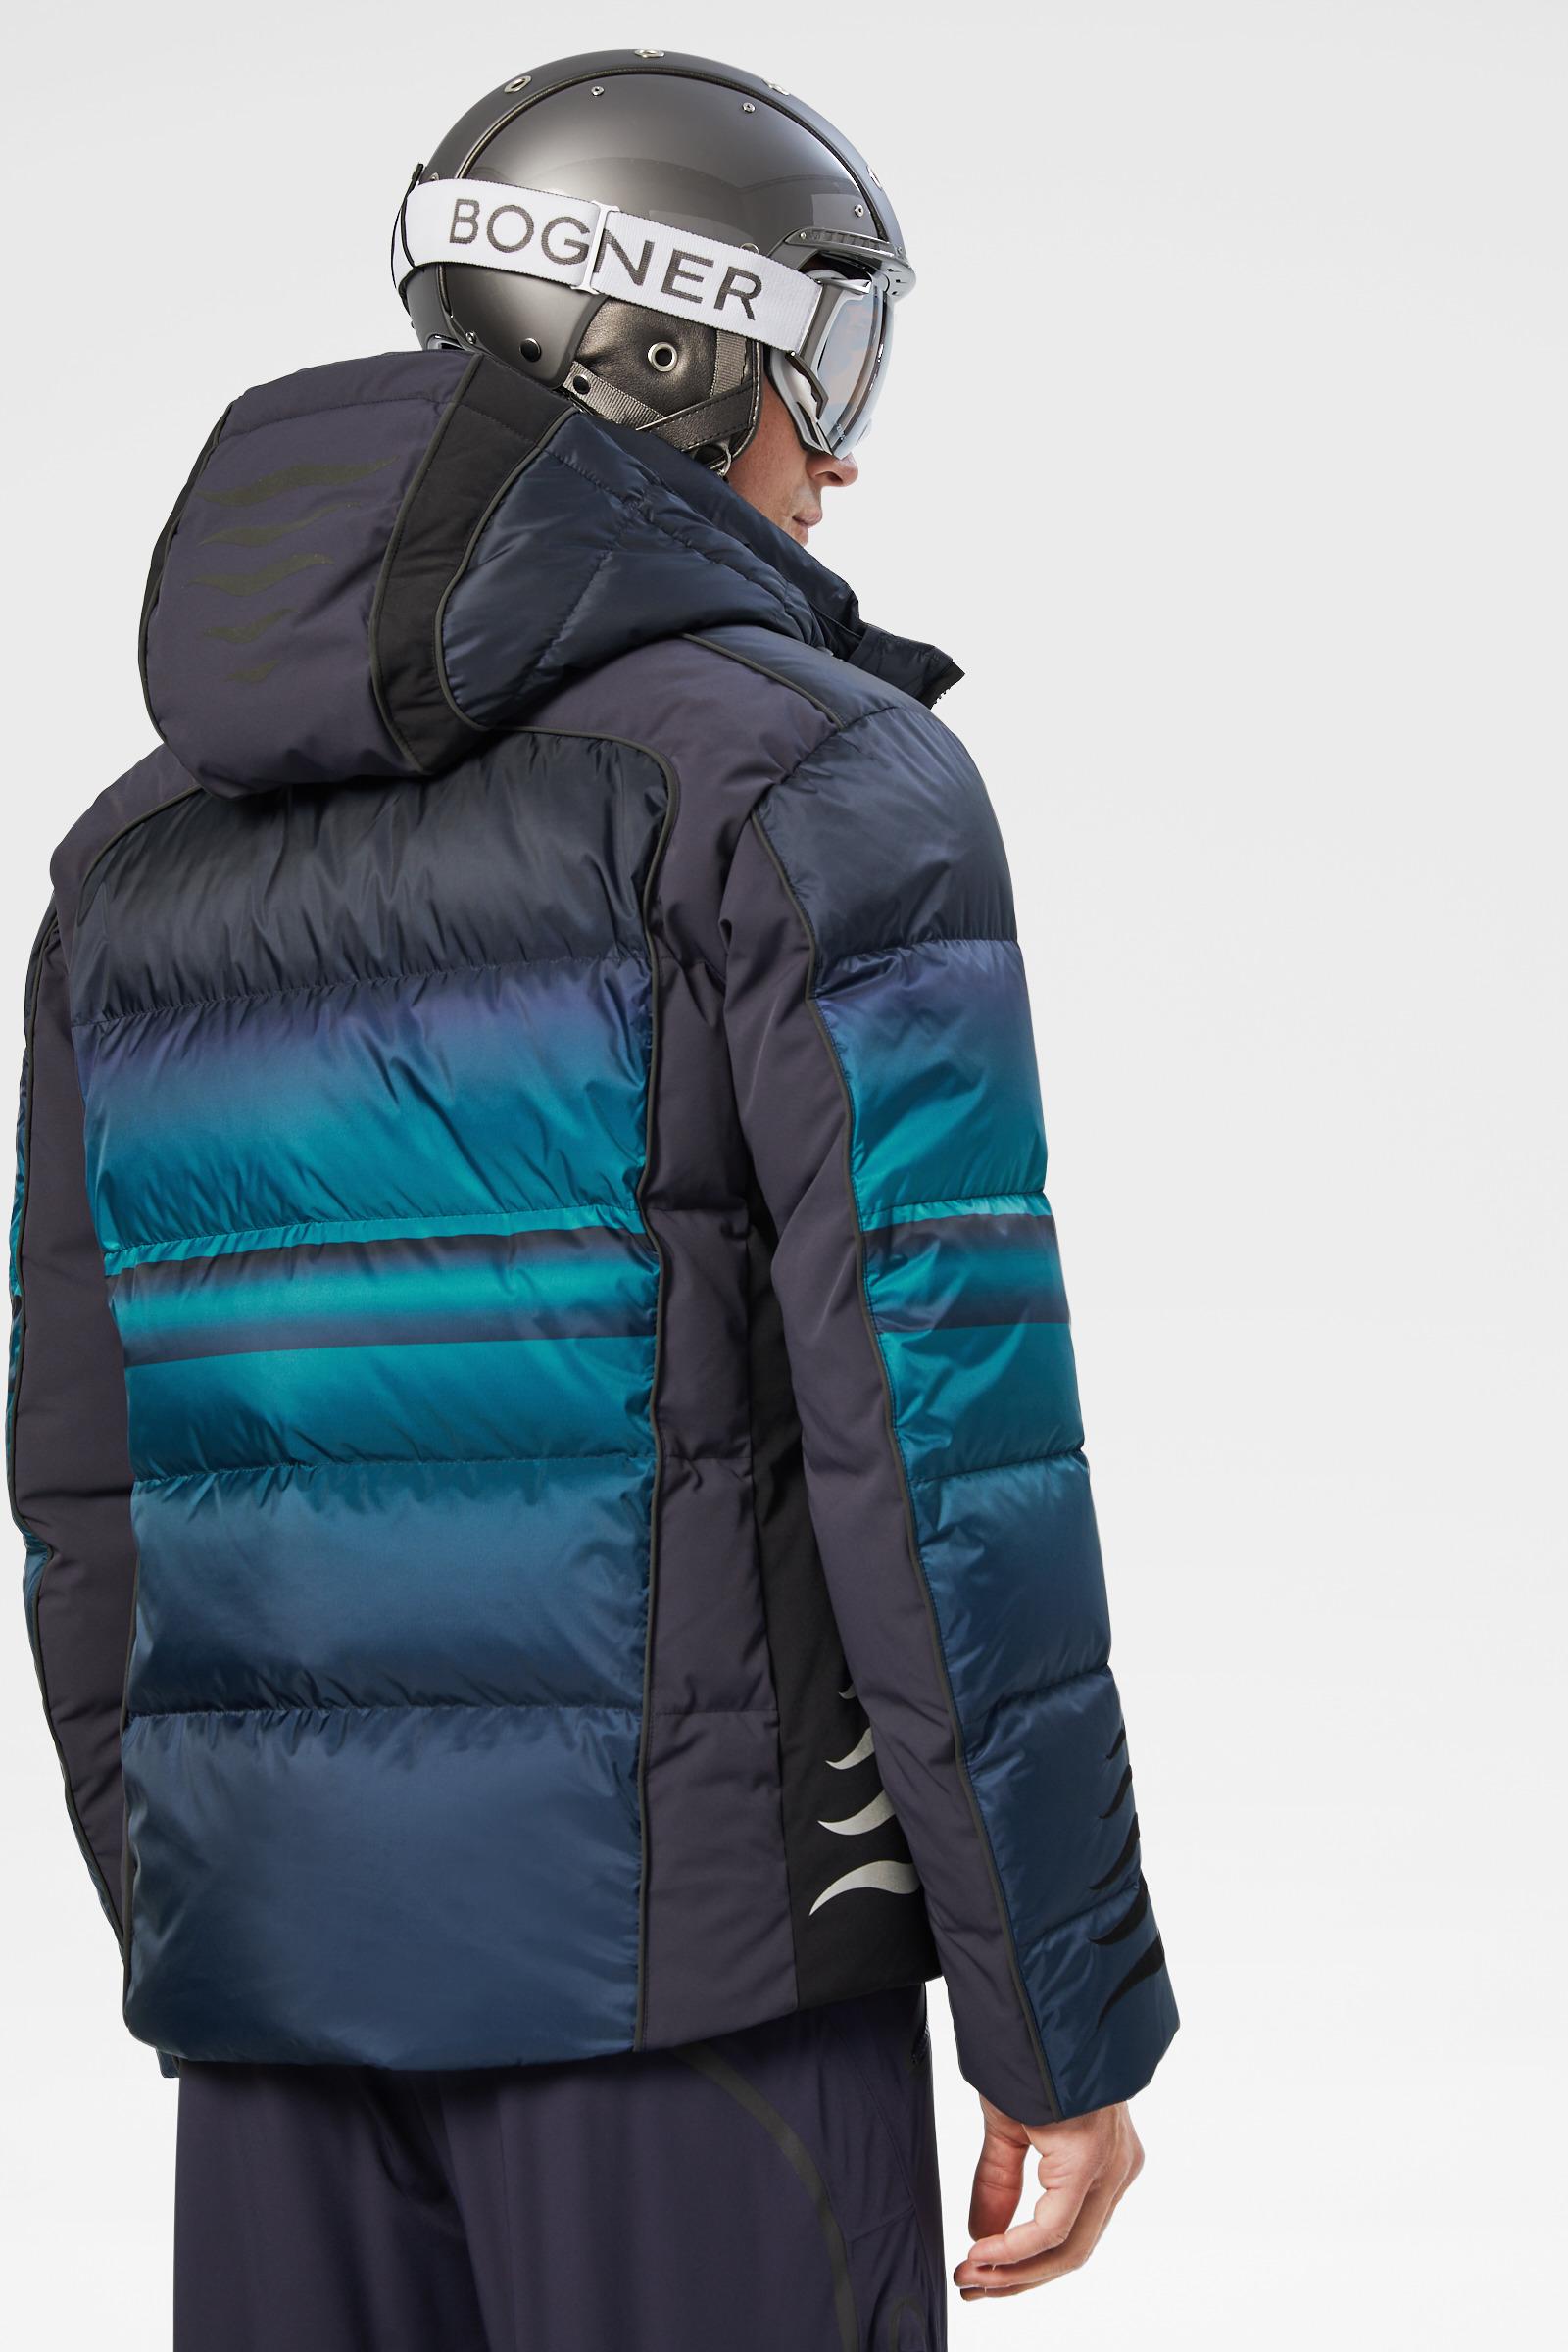 Bogner Jay Down Ski Jacket Discount Sale, UP TO 62% OFF | agrichembio.com